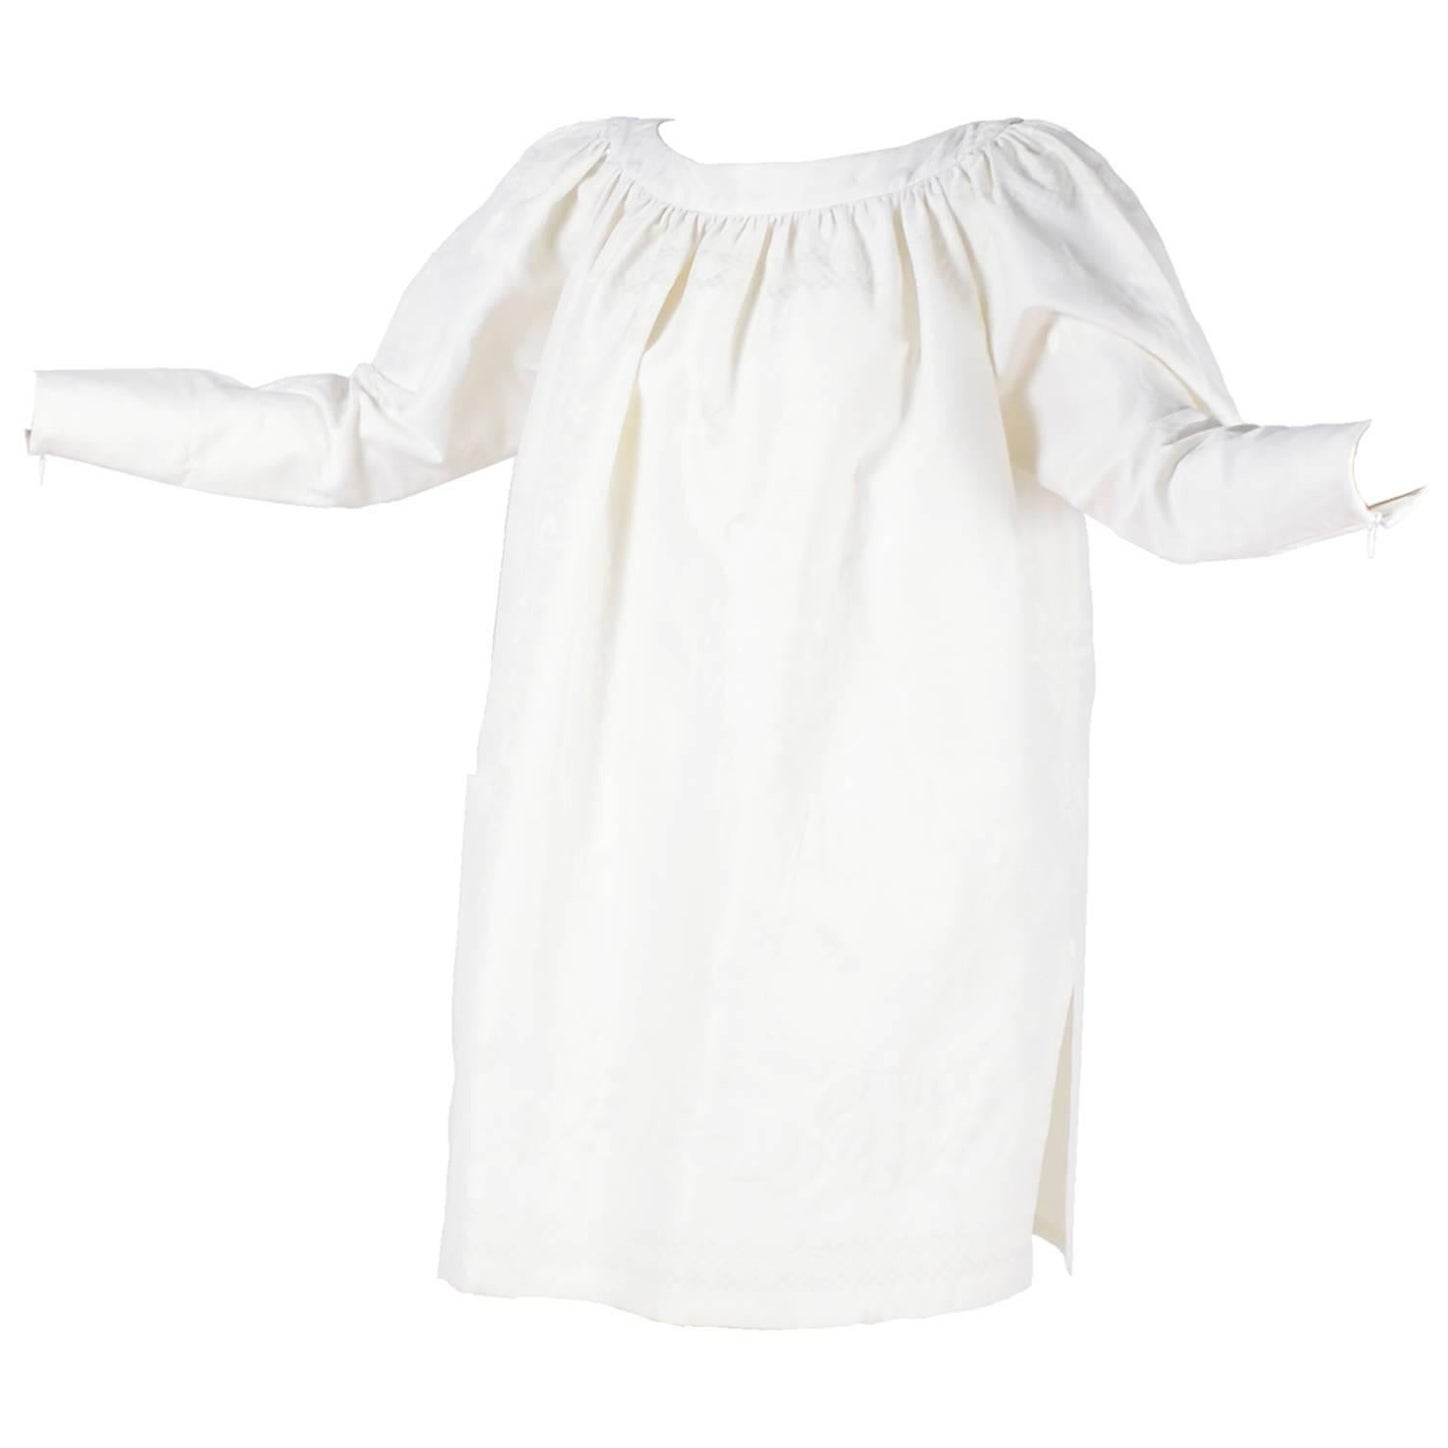 1980s Christian Lacroix Vintage White Linen Damask Tunic or Dress w Original Tag